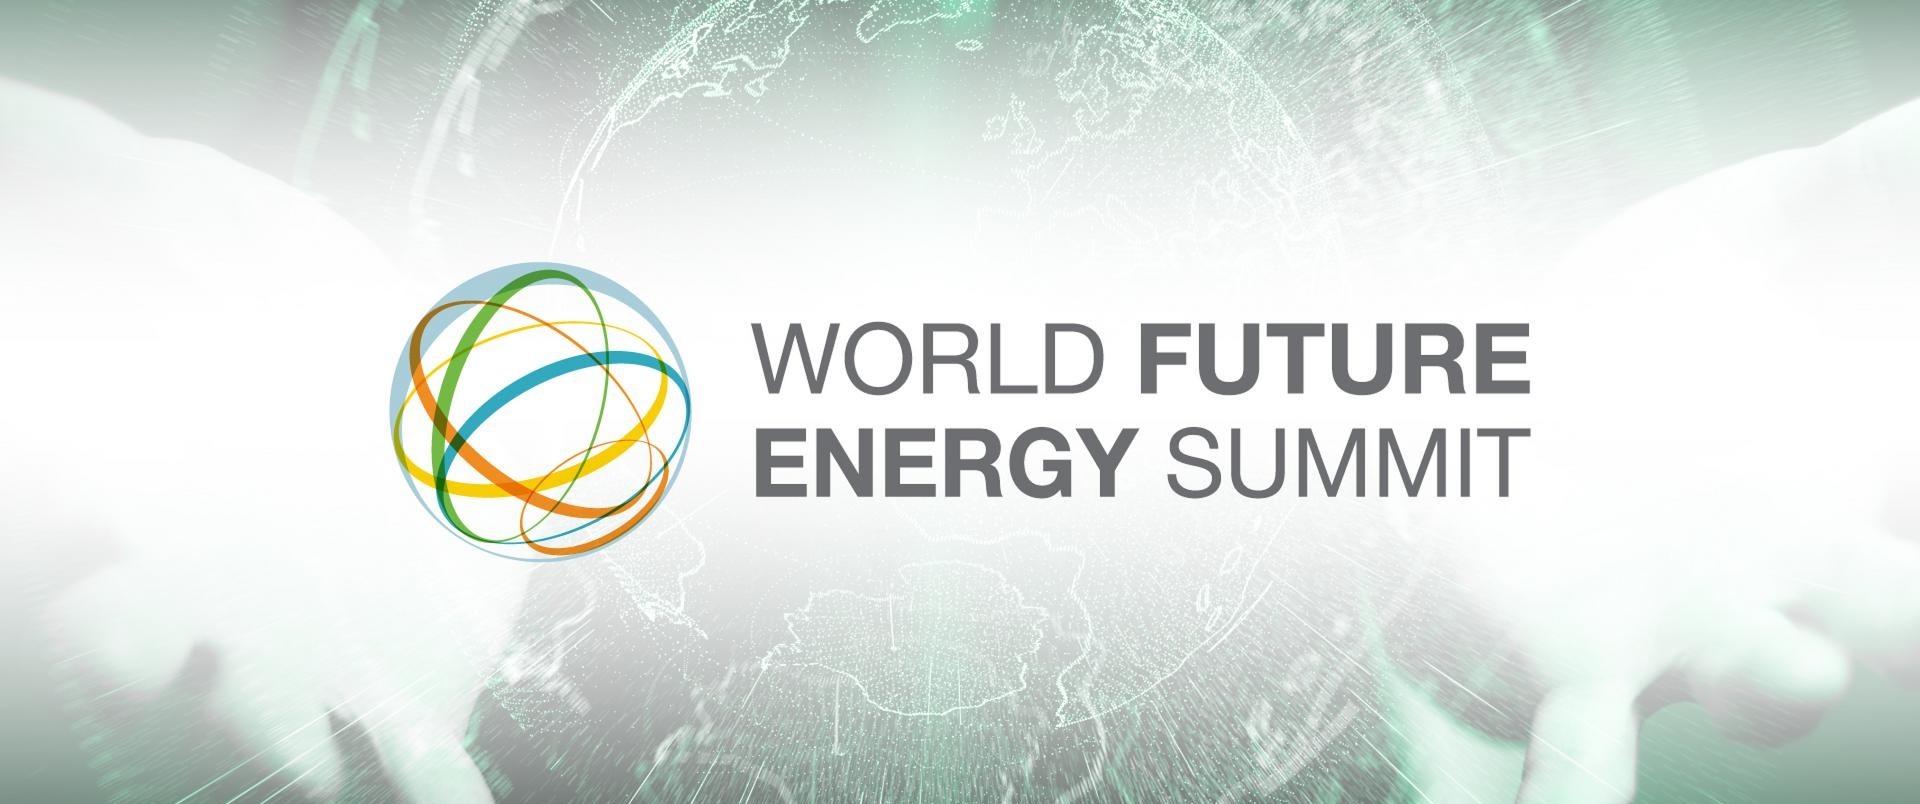 World Future Energy Summit 2020 - Coming Soon in UAE